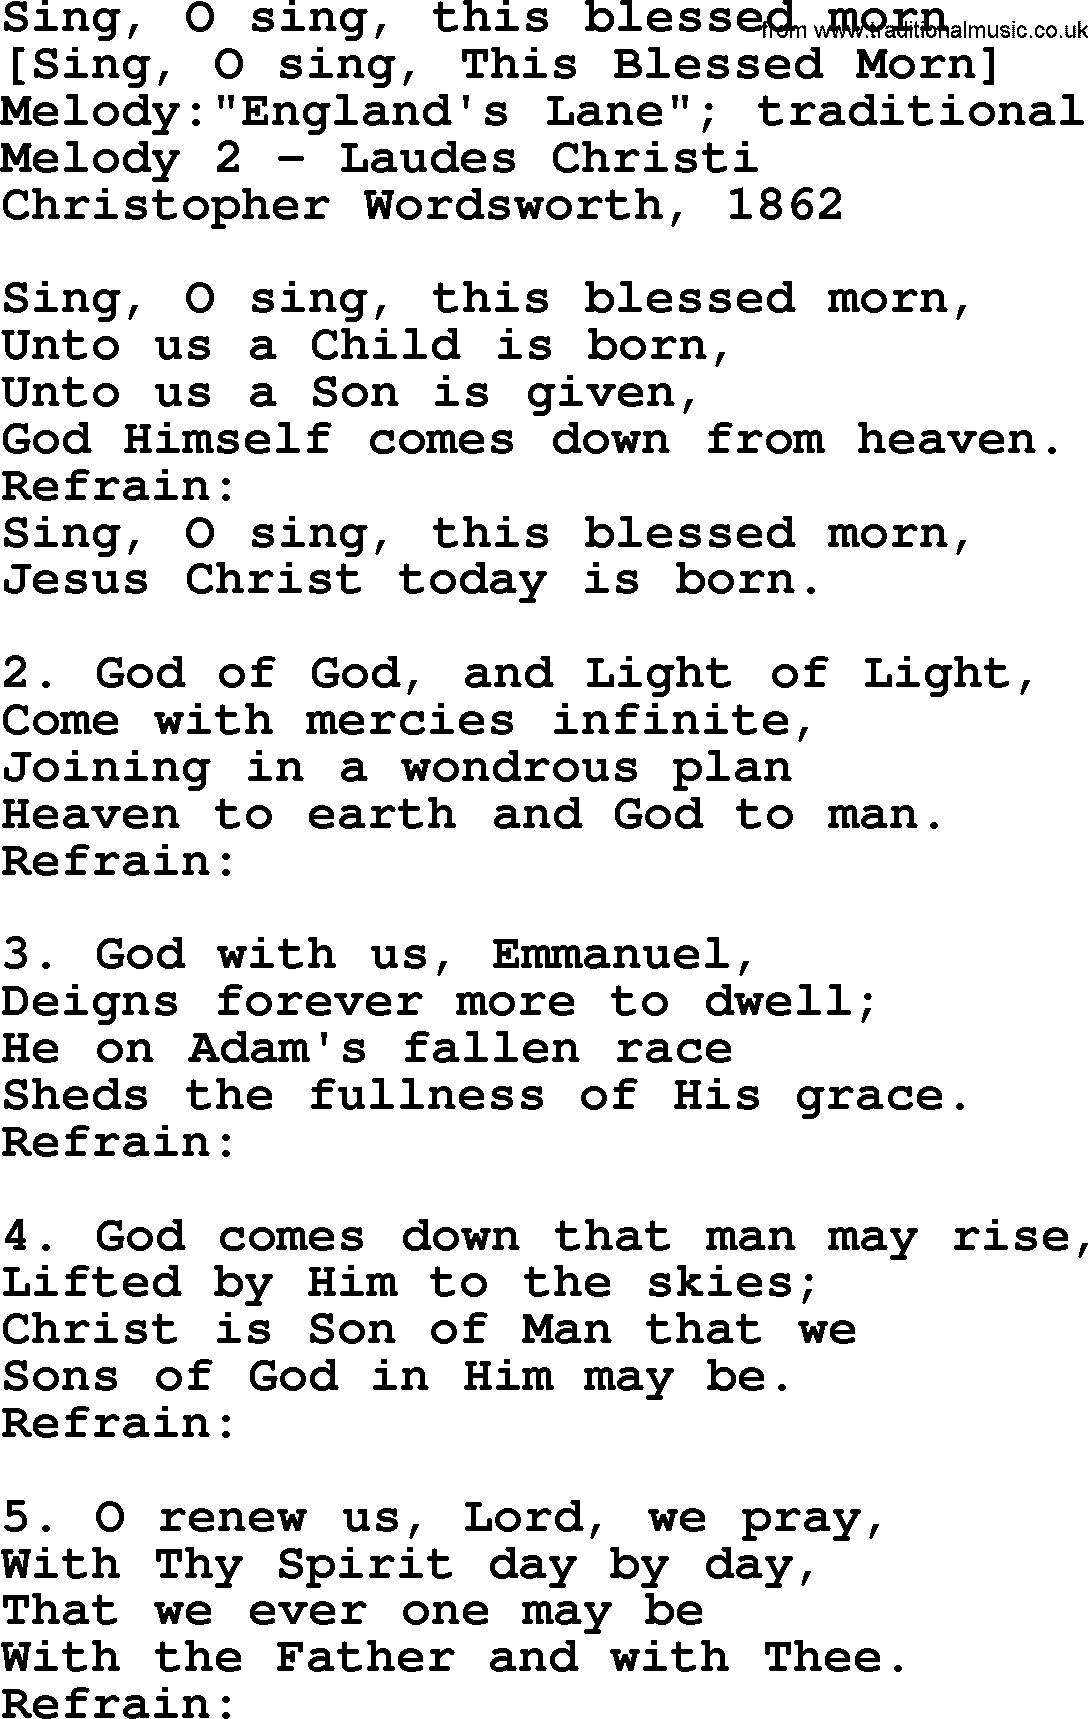 Old English Song: Sing, O Sing, This Blessed Morn lyrics